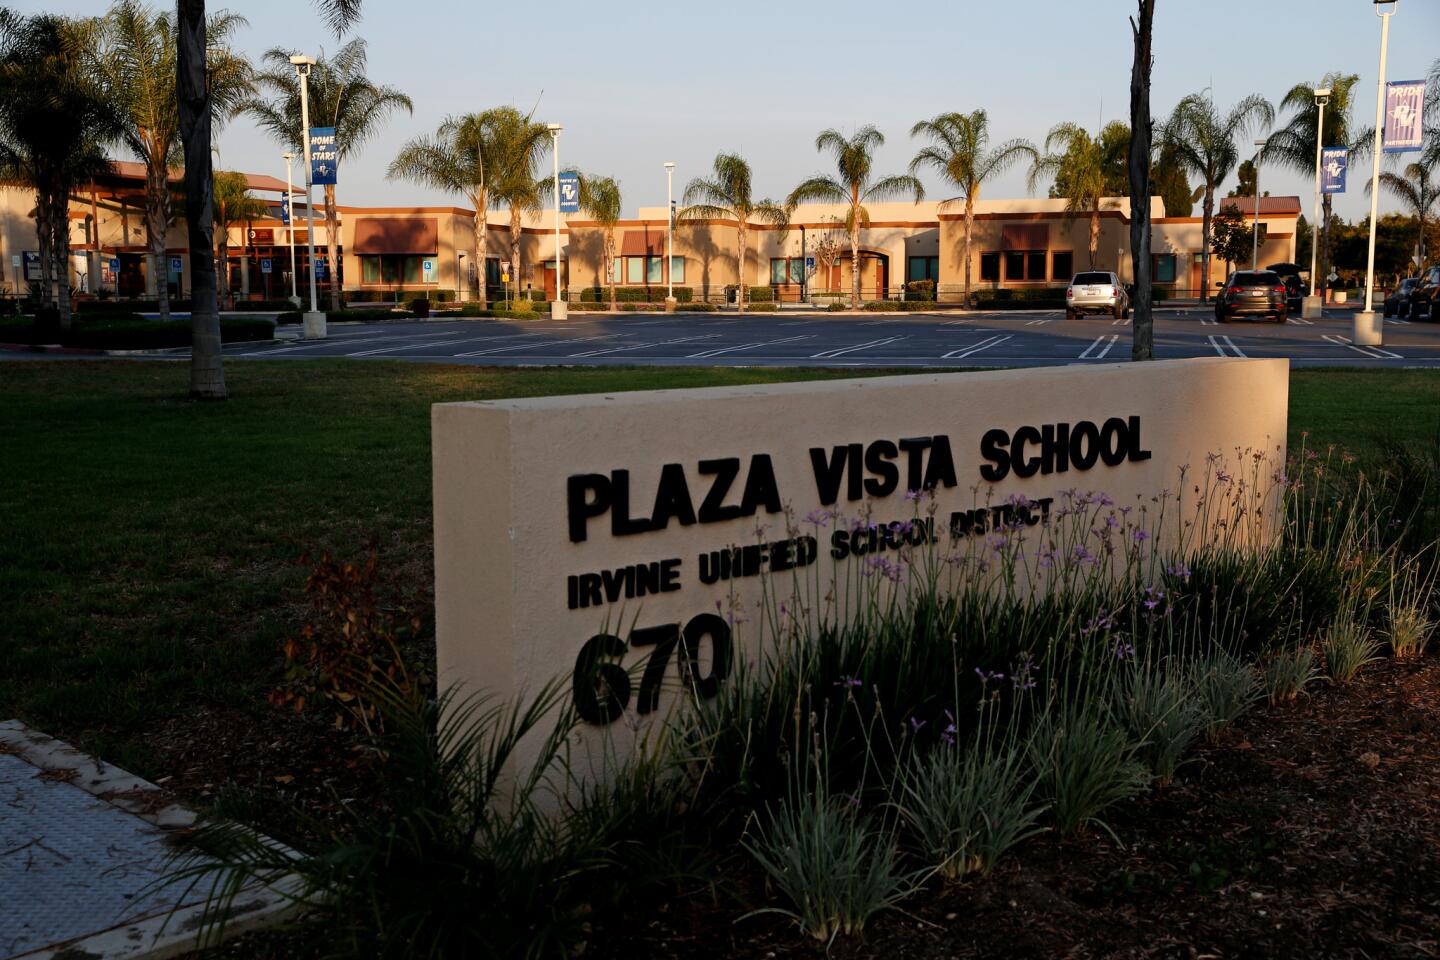 Plaza Vista School